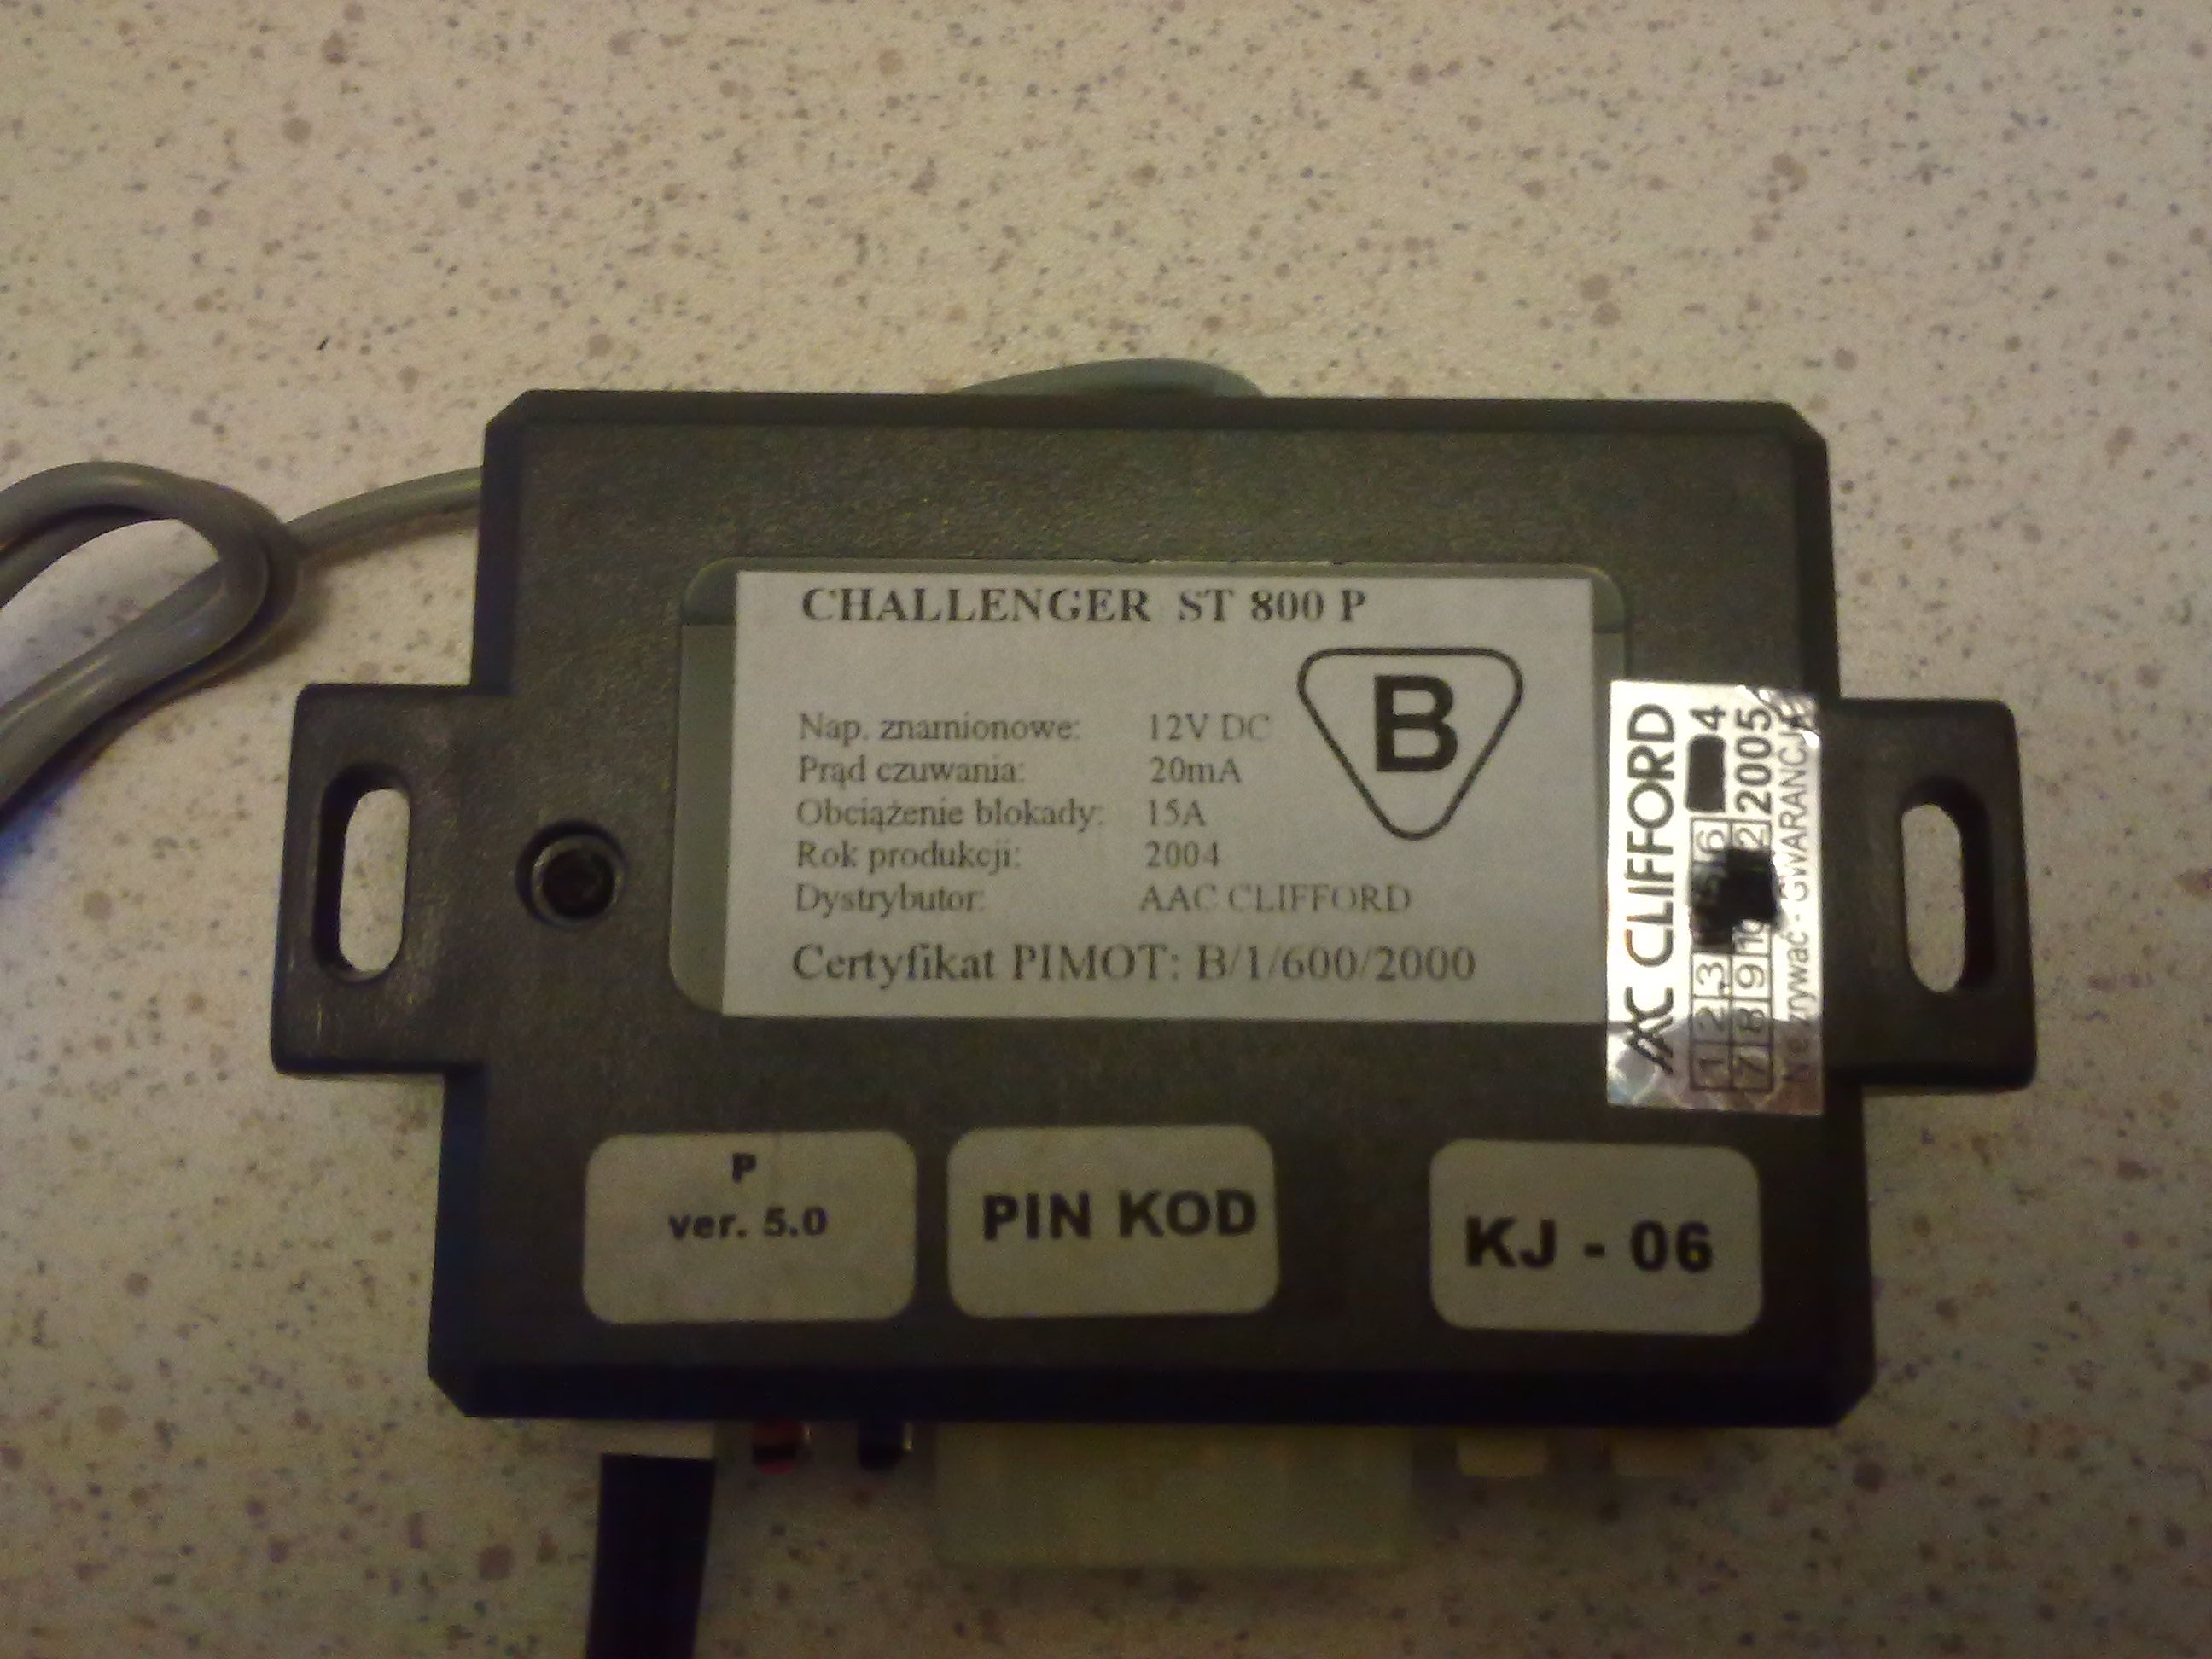 Challenger ST 800 P ver.5.0 z PIN KODEM elektroda.pl